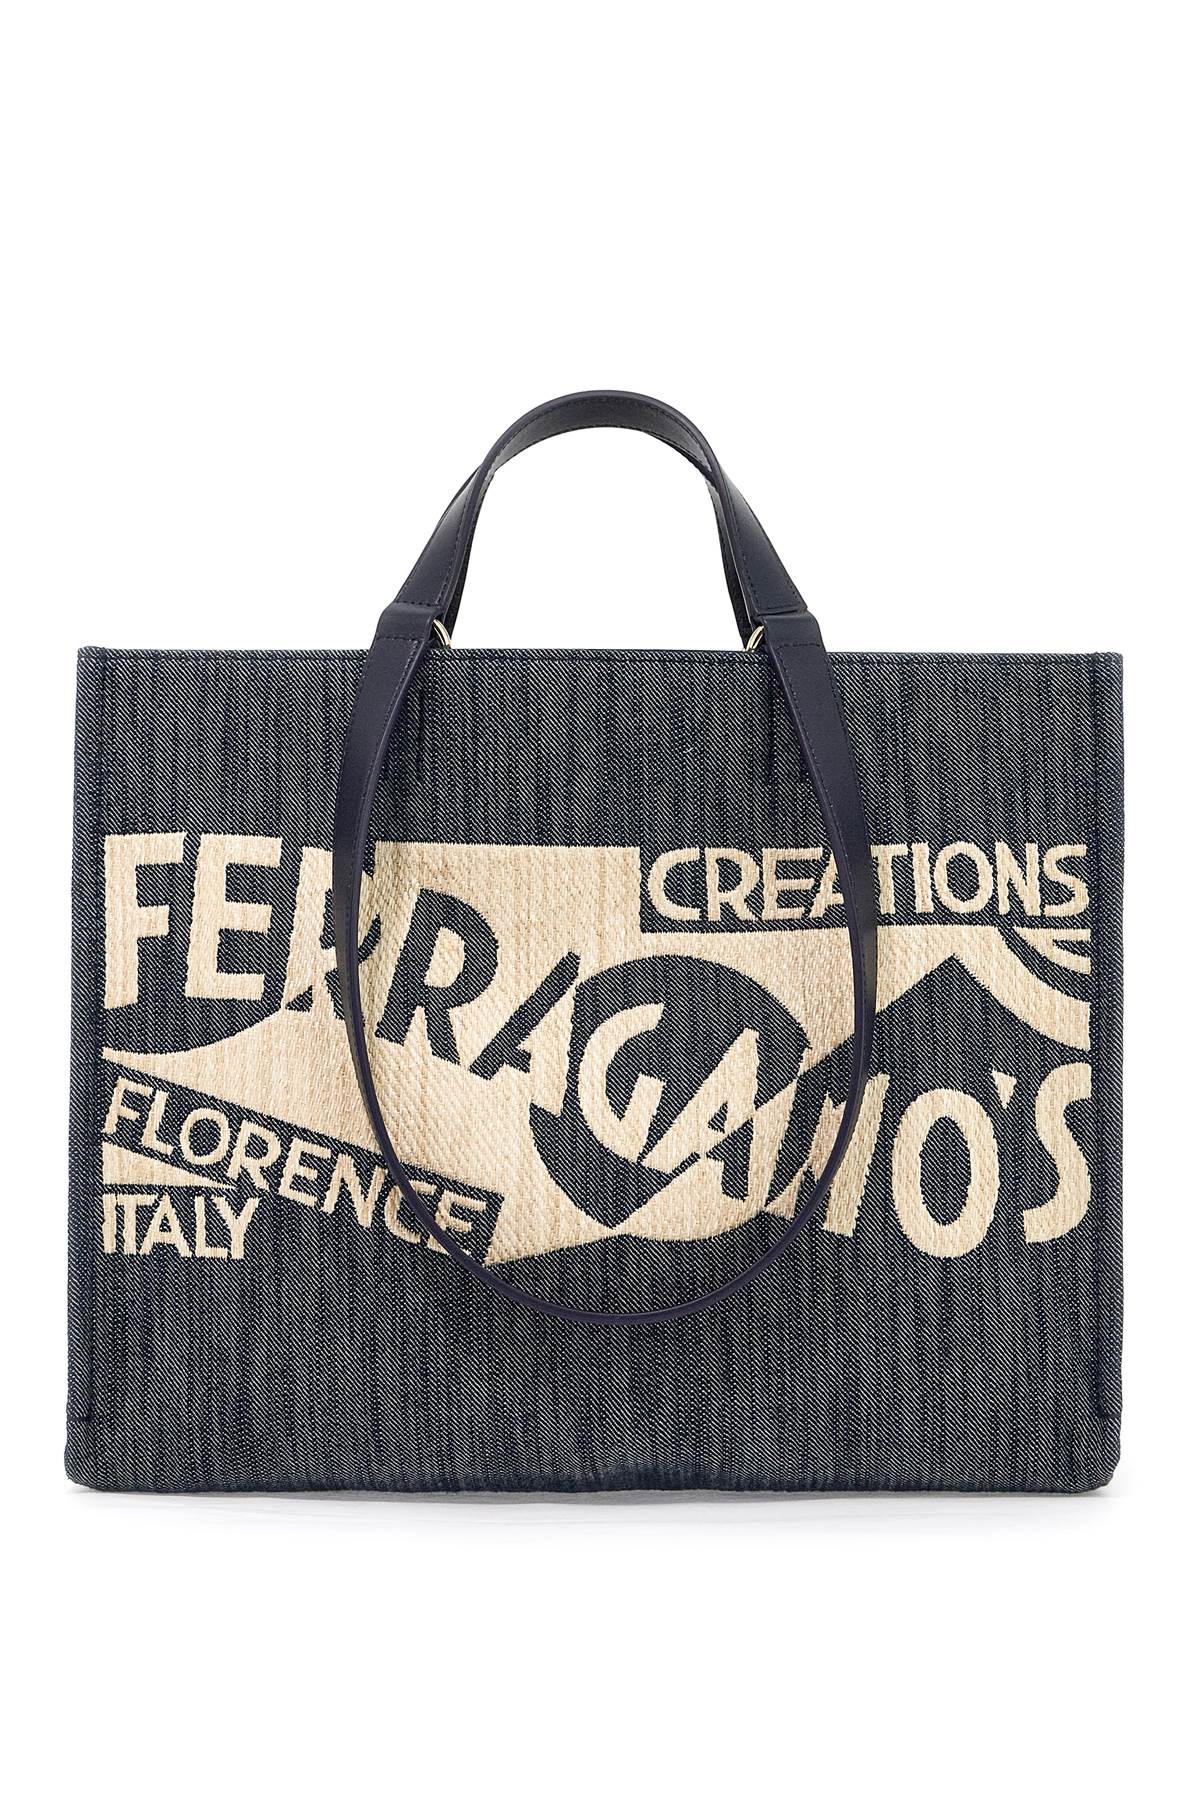 Ferragamo FERRAGAMO logo printed tote bag (m)